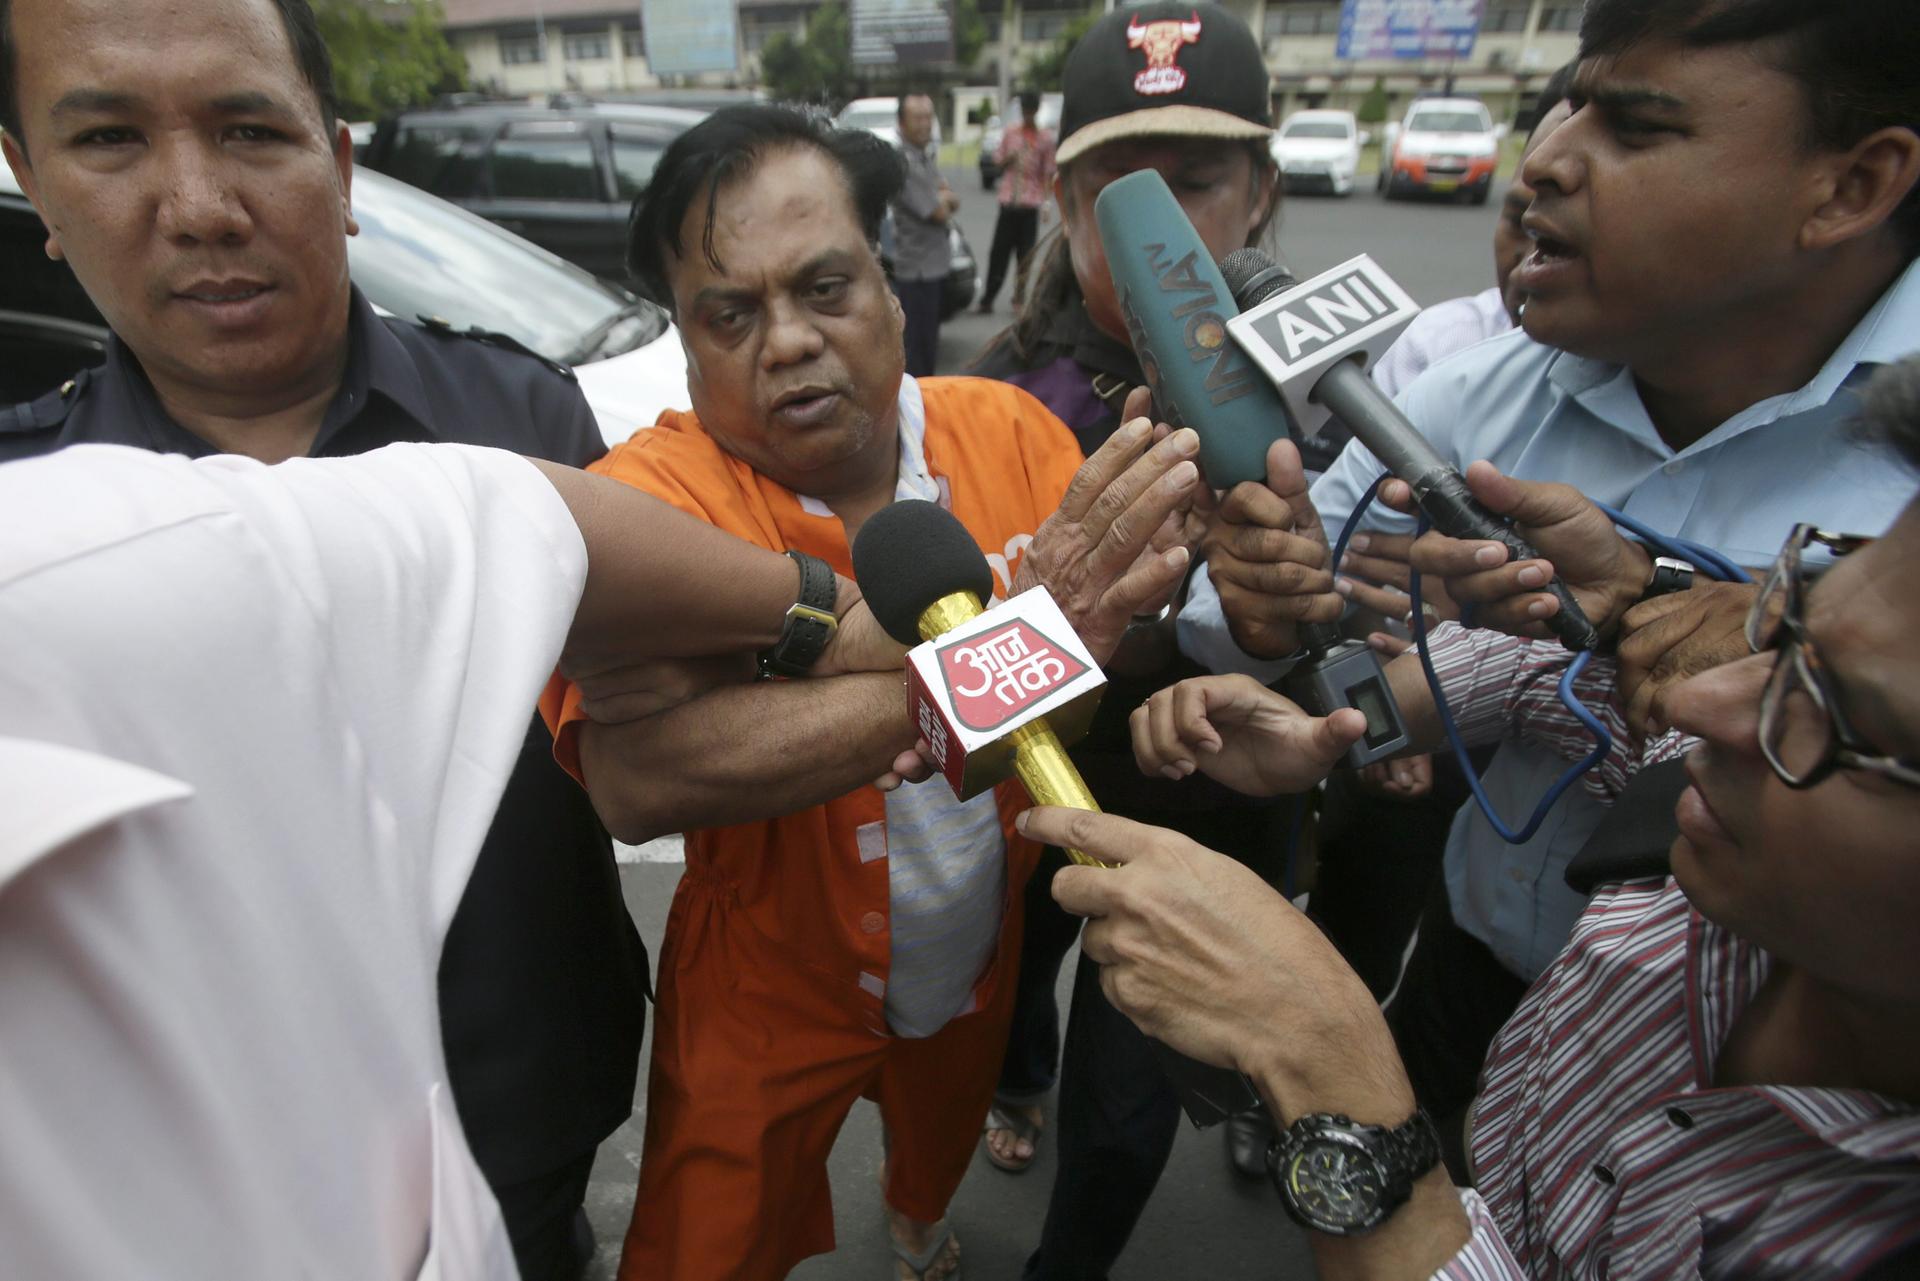 Rajendra Sadashiv Nikalje - known as Chhota Rajan - in custody outside Bali Police headquarters in Denpasar, Indonesia.Photos: EPA